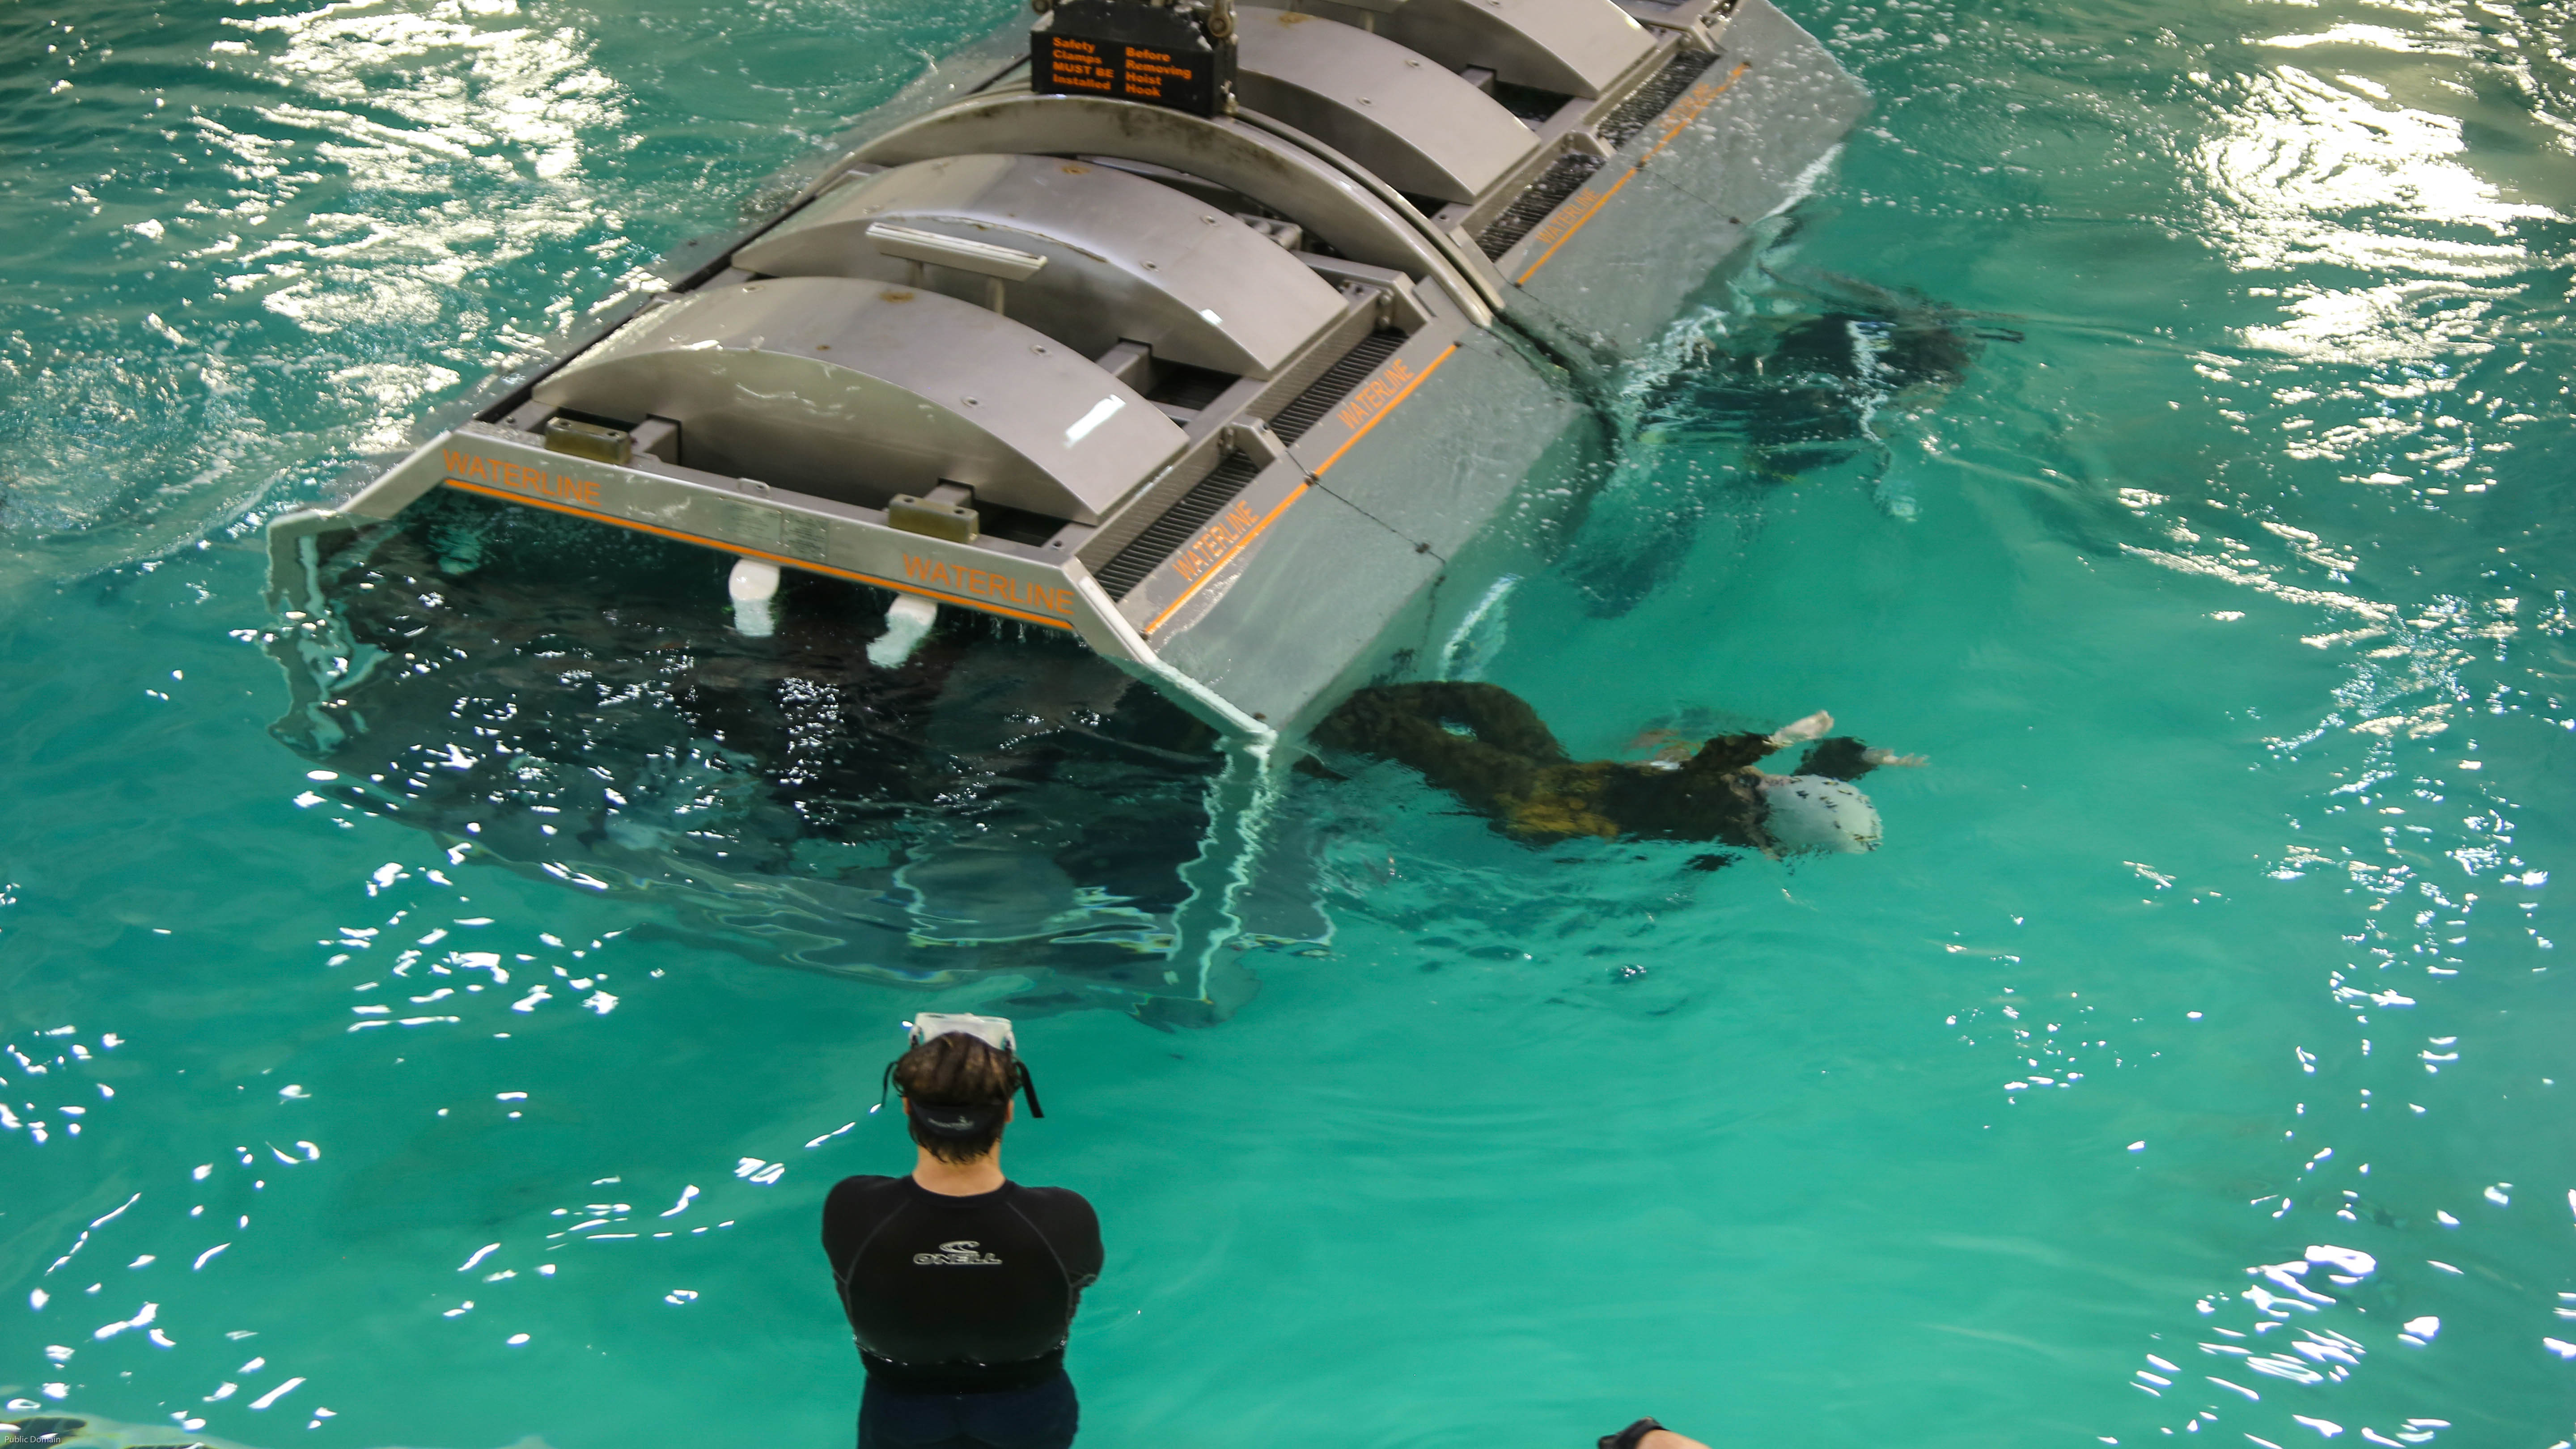 Underwater Egress Training > United States Marine Corps Flagship > News Display5760 x 3240